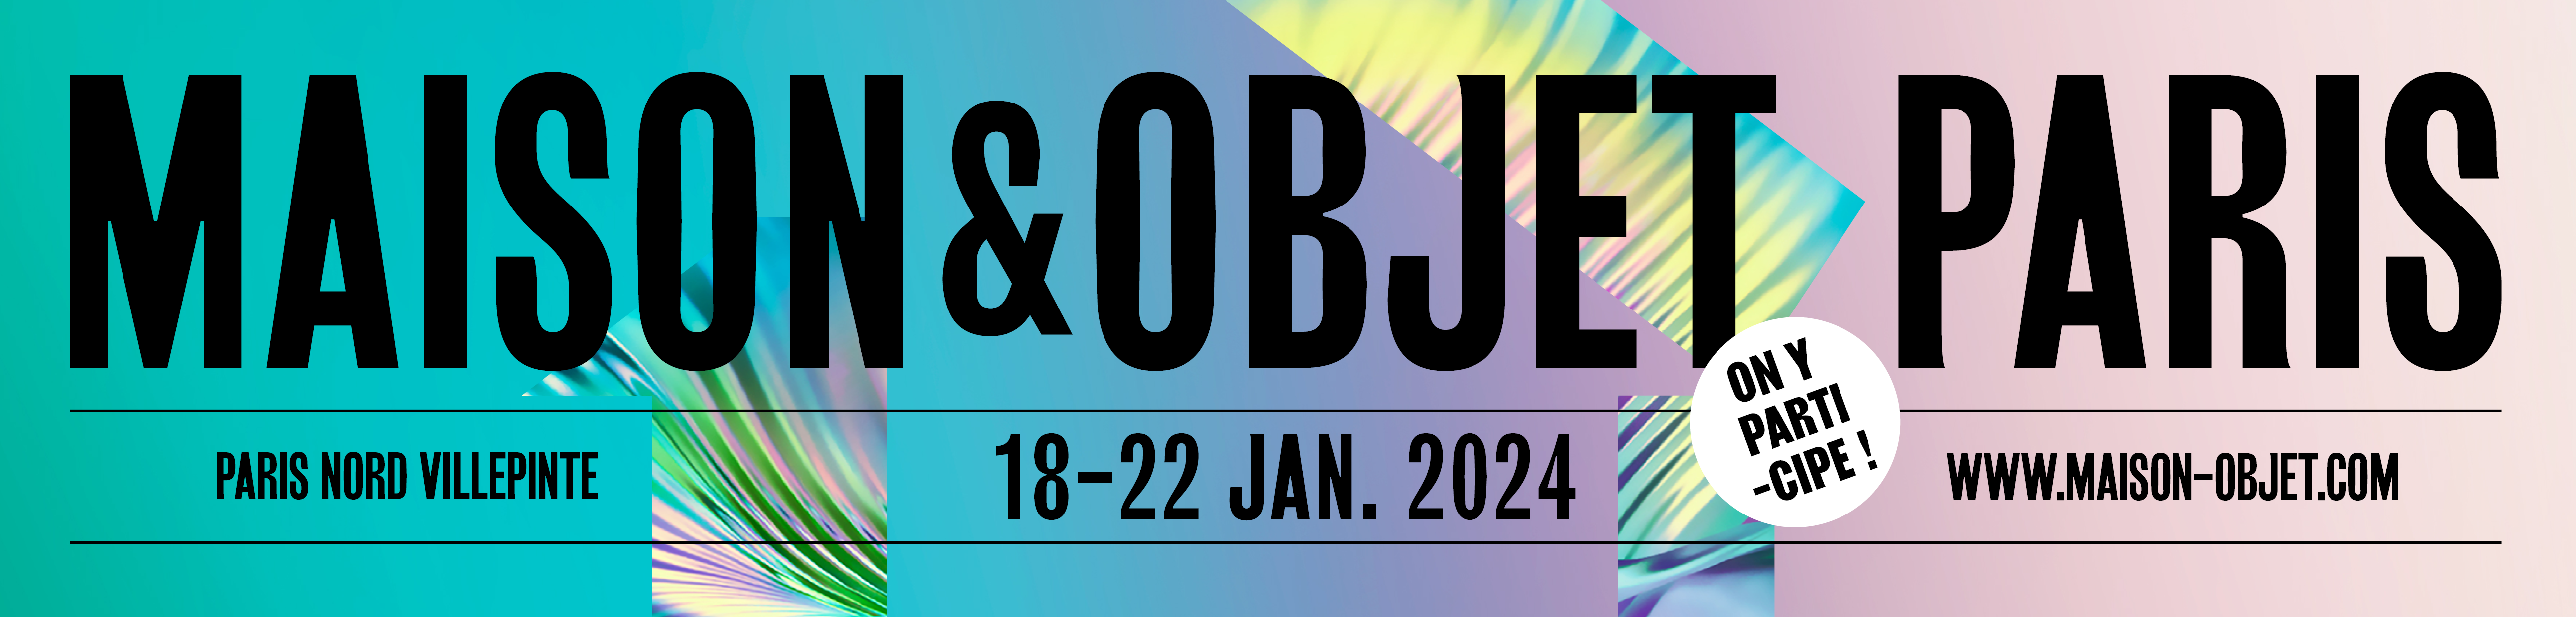 Kores at Maison & Objet, Paris, 18-22 January 2024